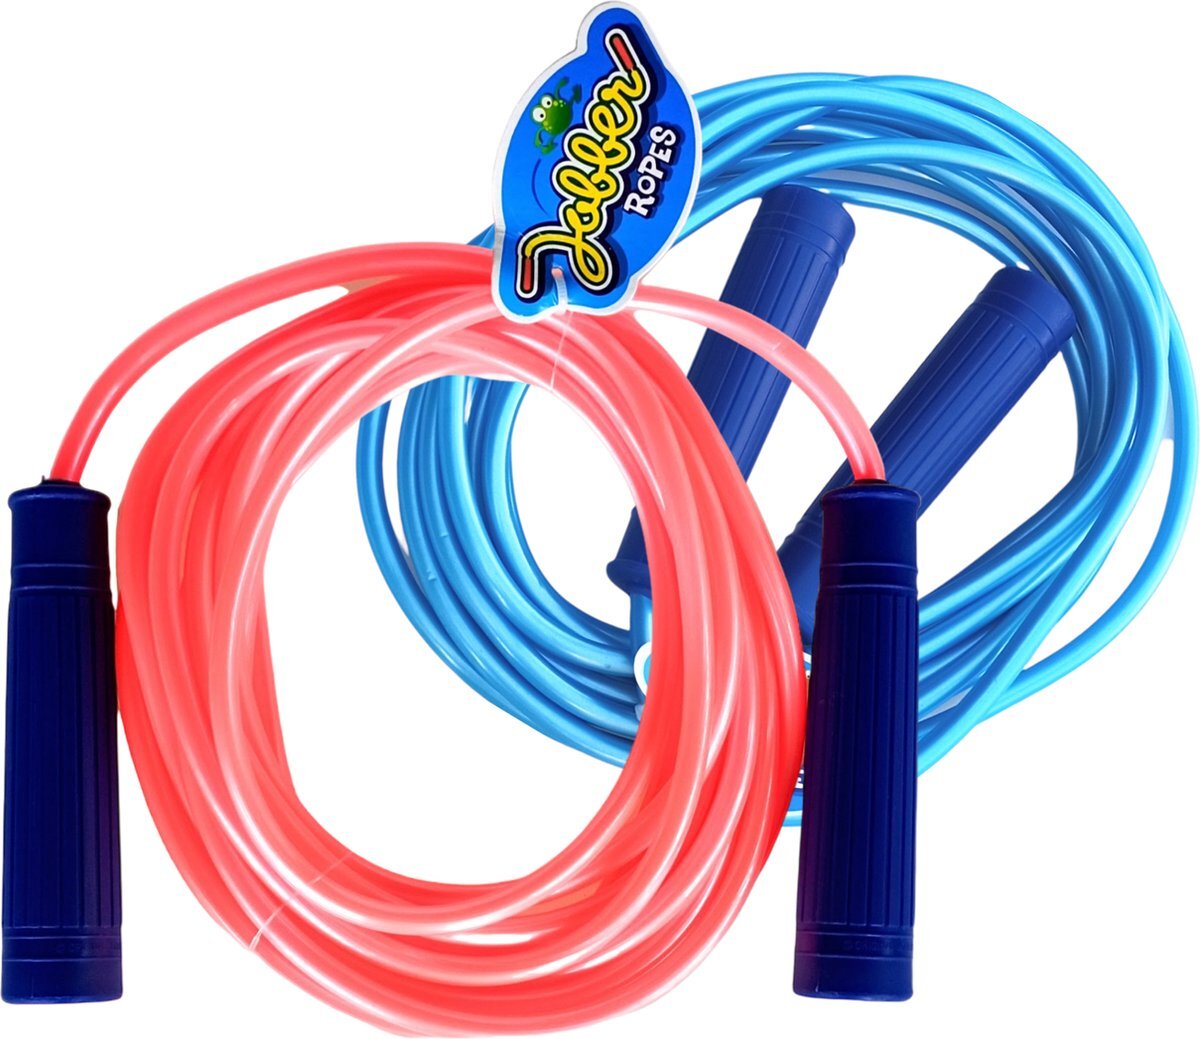 Jobber Toys Jobber - SET - 2x Springtouwen - Roze - Blauw - 5 meter - Groepsspringtouwen